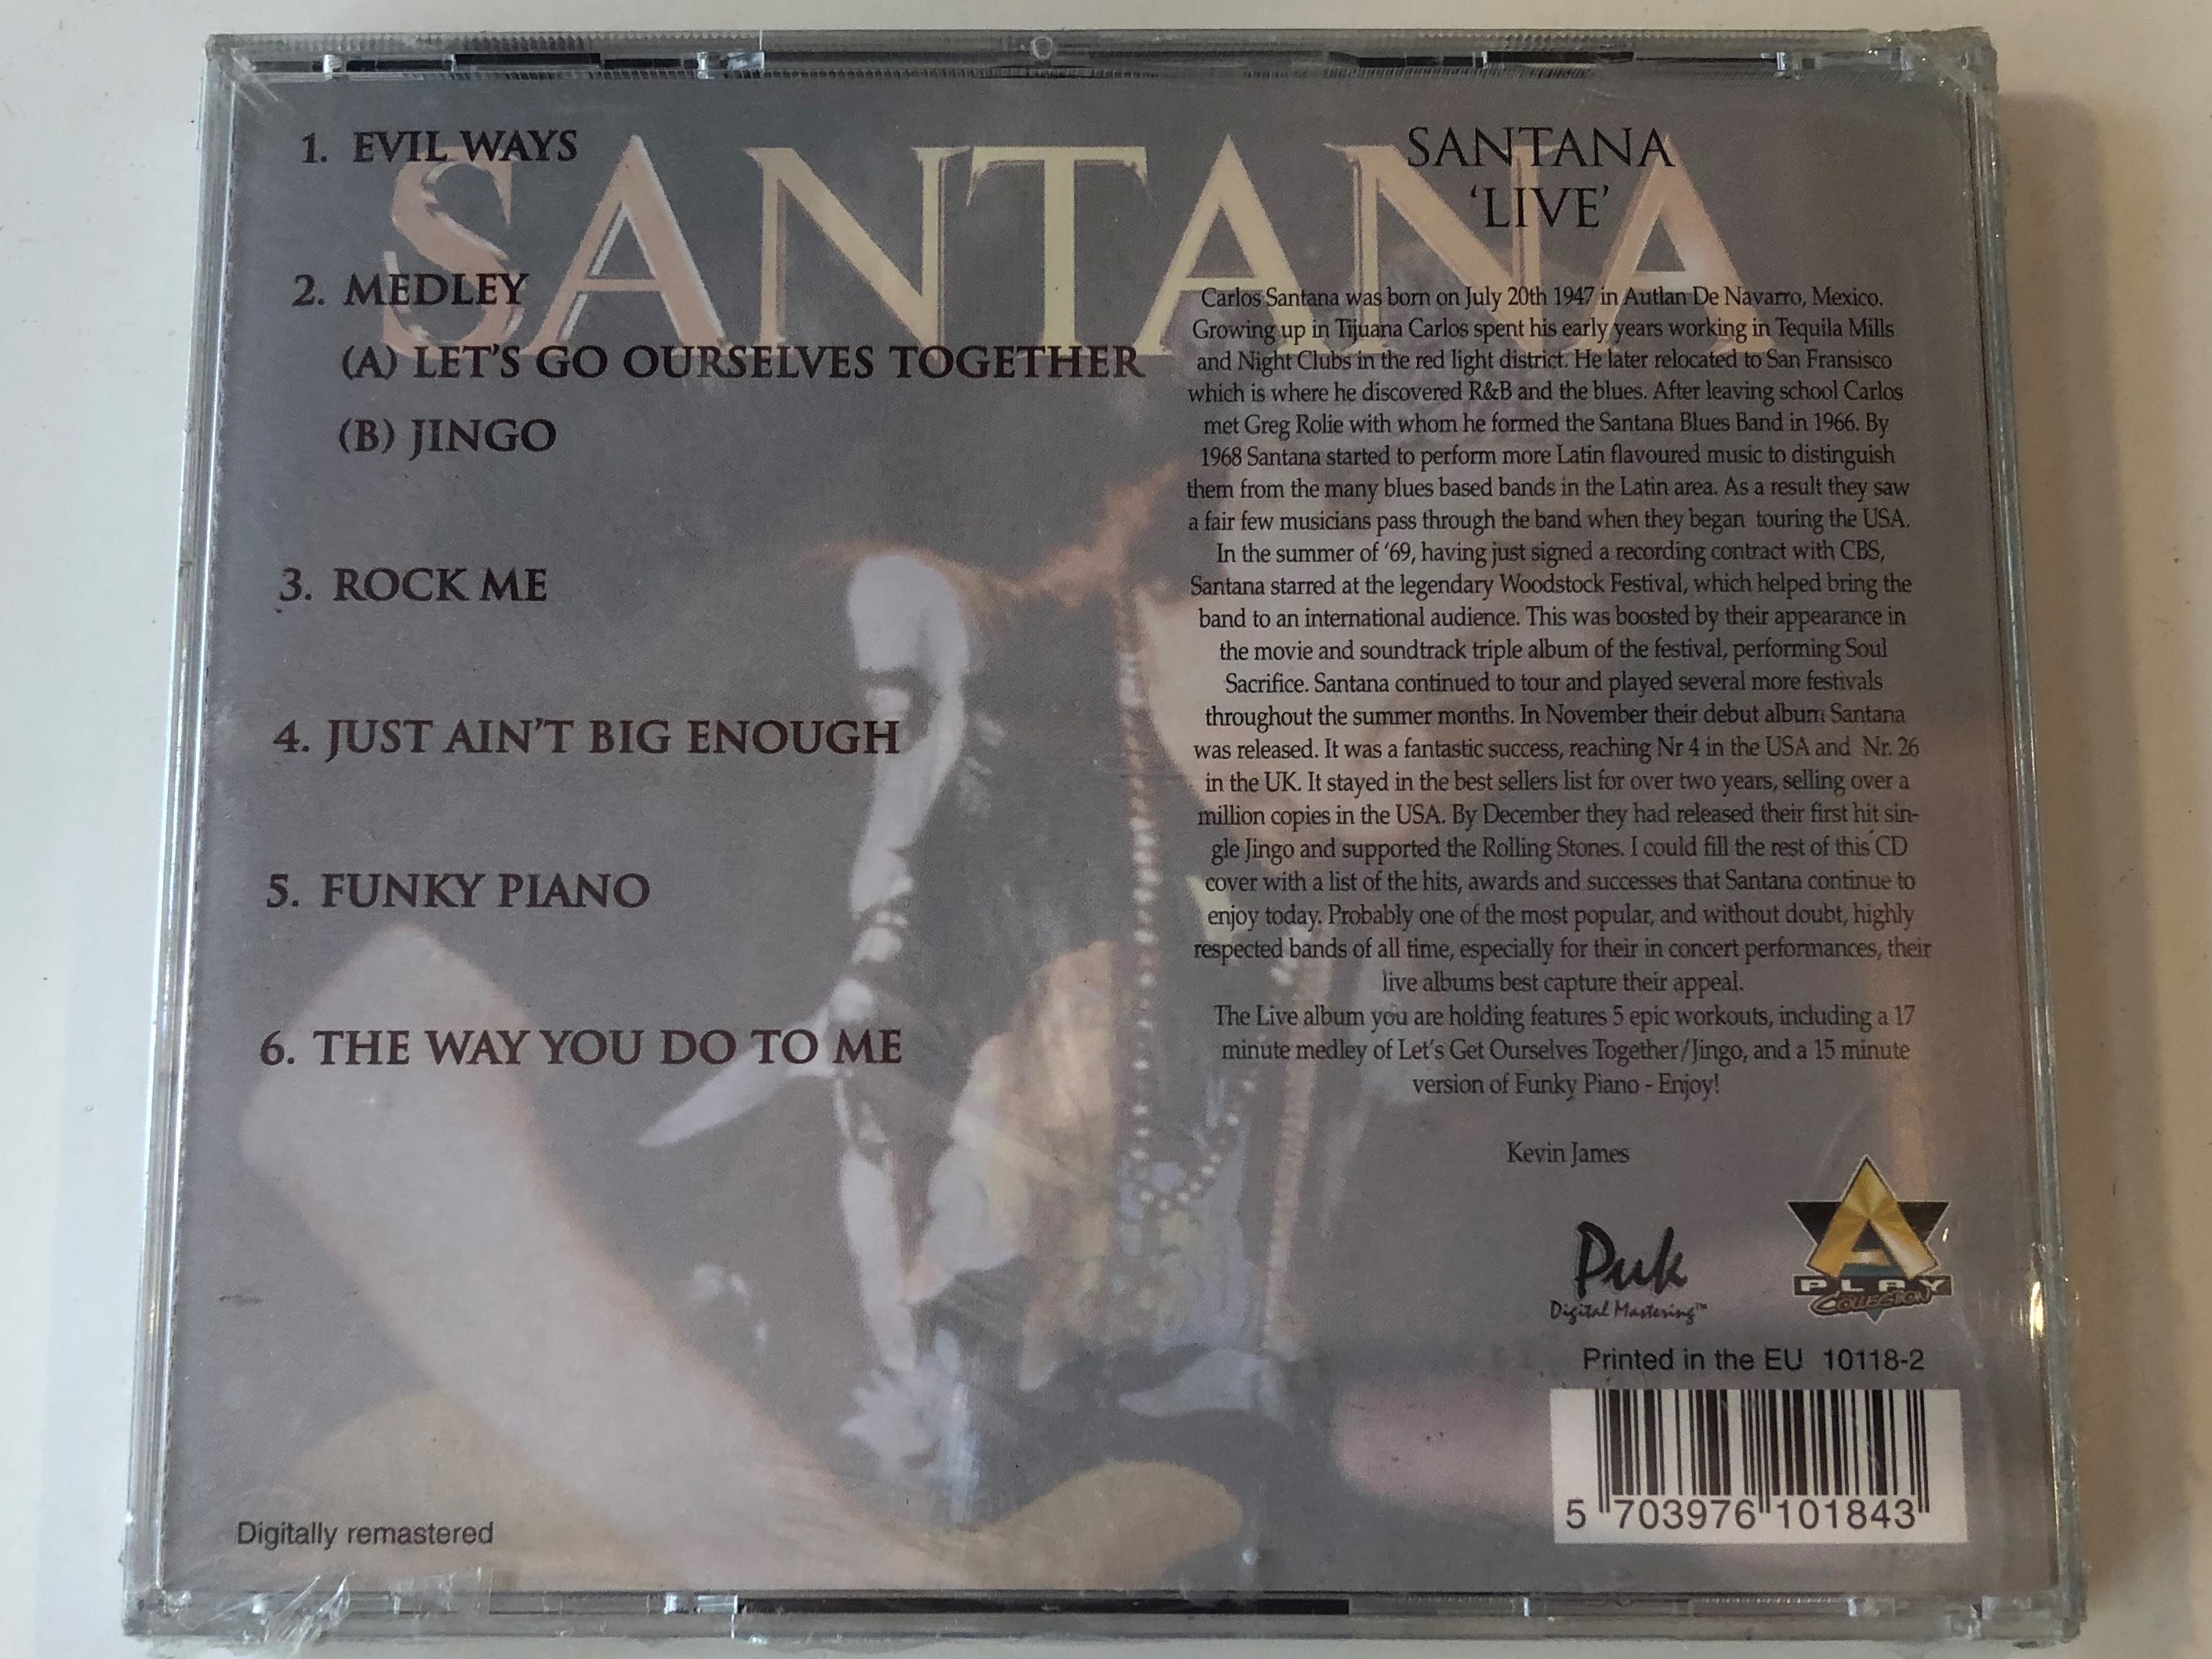 santana-live-evil-ways-let-s-go-ourselves-together-jingo-rock-me-a-play-collection-audio-cd-10118-2-2-.jpg